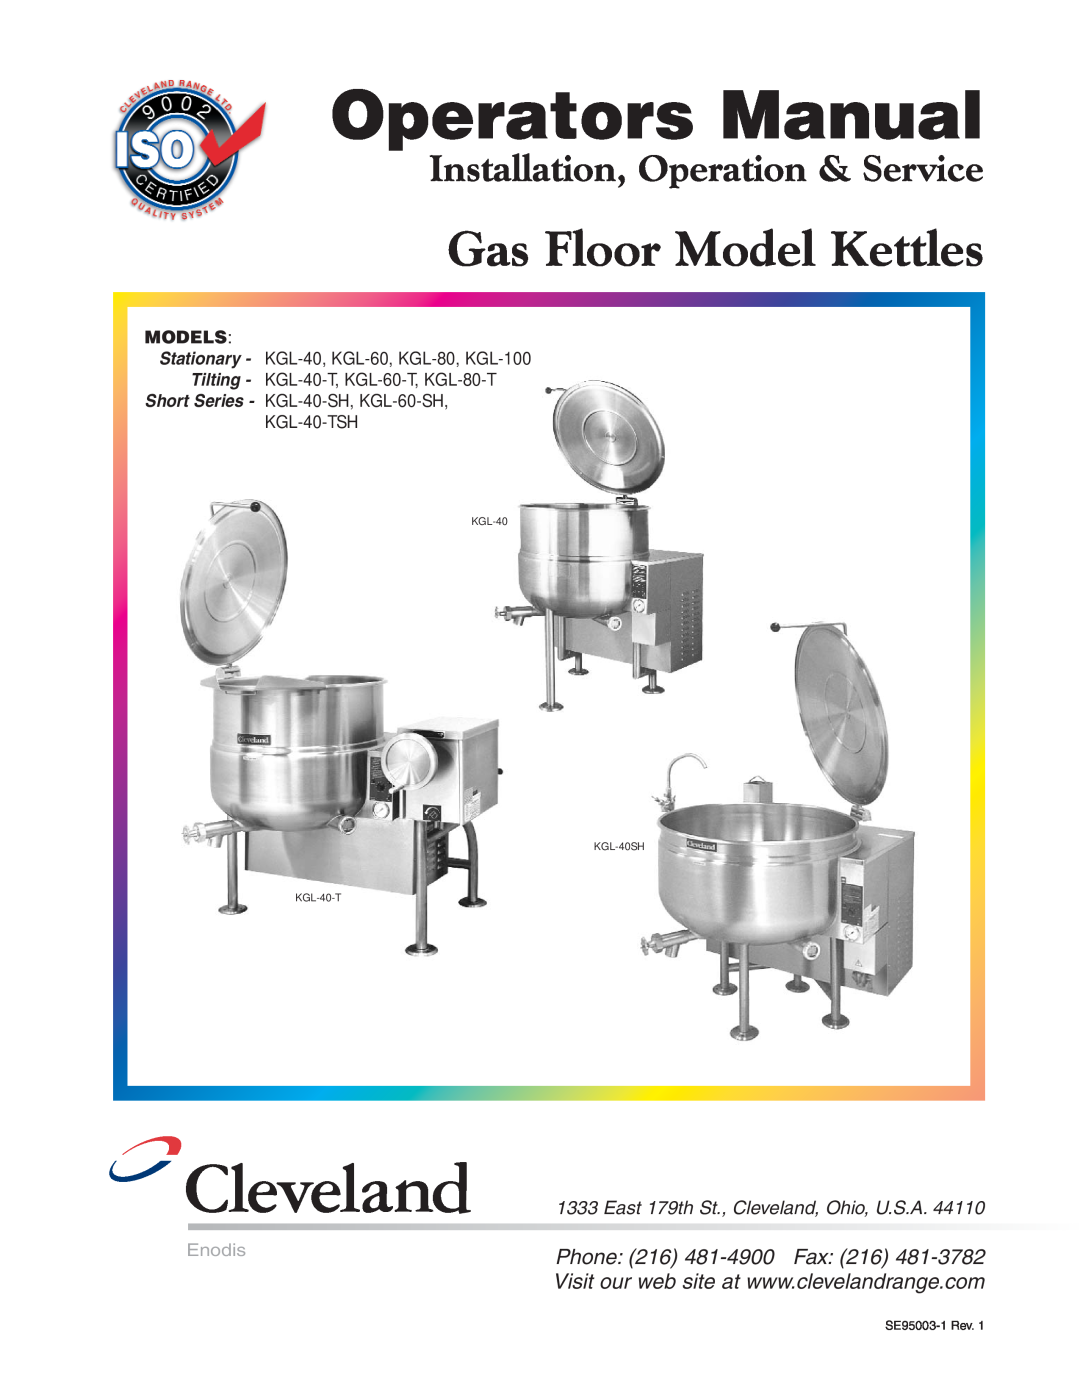 Cleveland Range KGL-100, KGL-40-T manual Operators Manual, Gas Floor Model Kettles, Installation, Operation & Service 